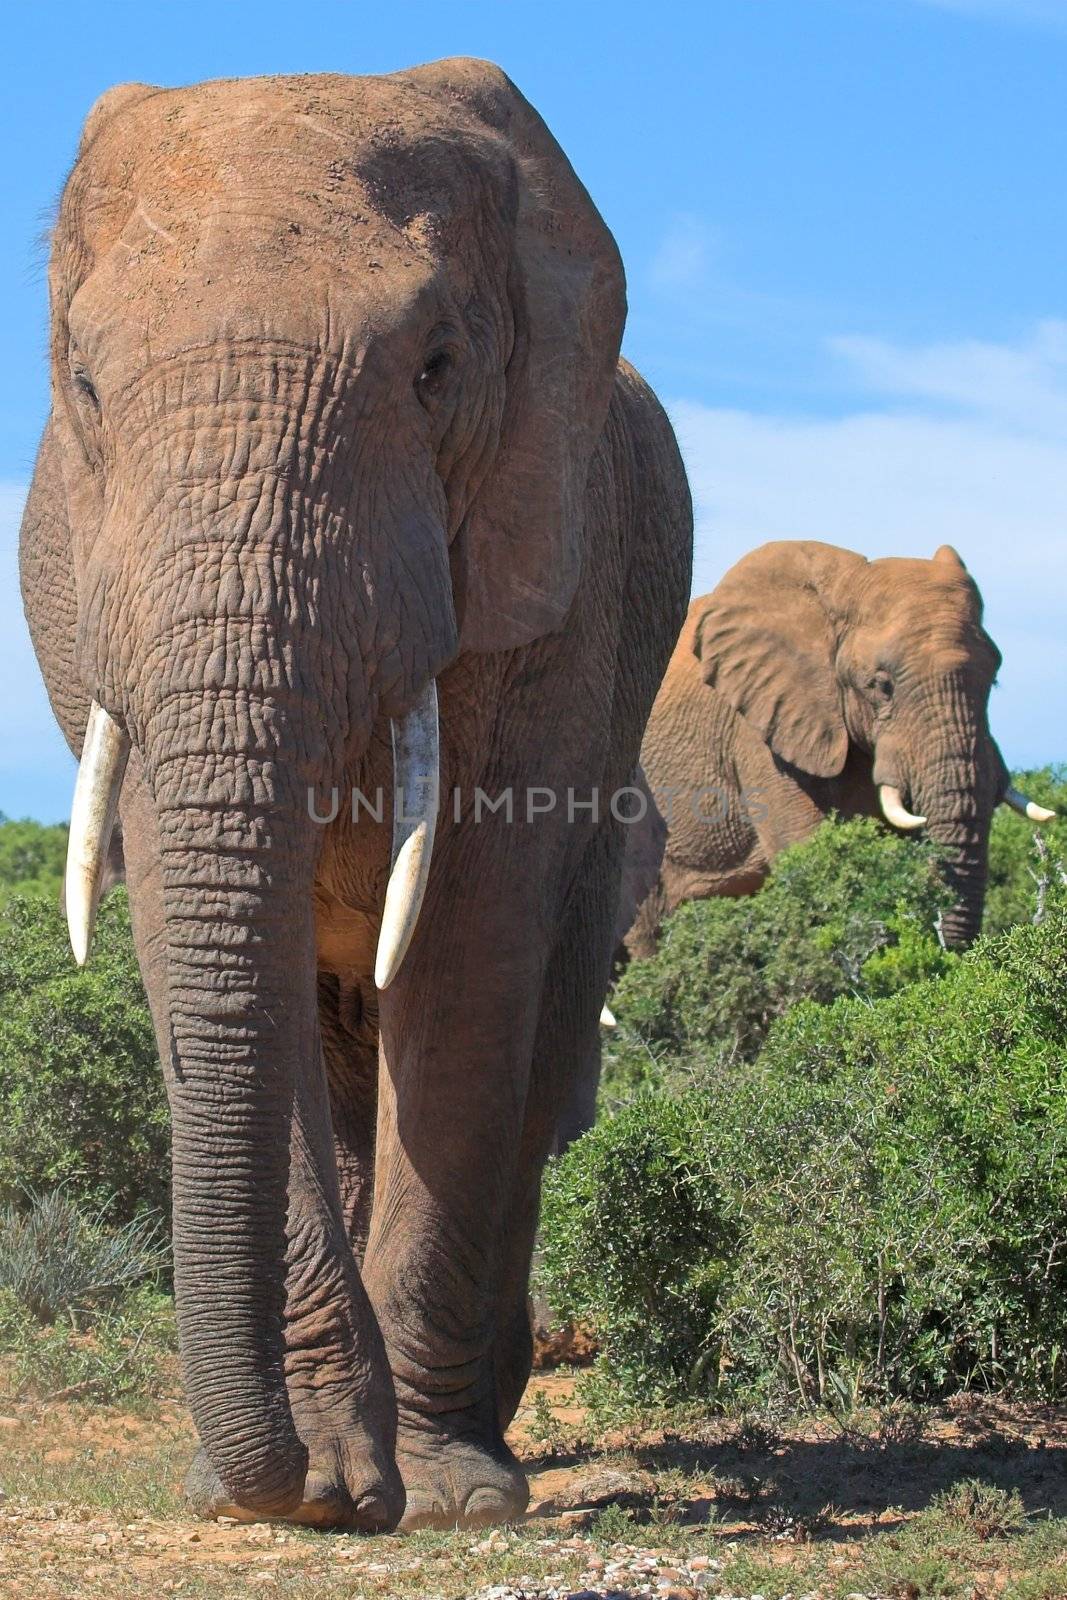 Elephants in the African bush by nightowlza